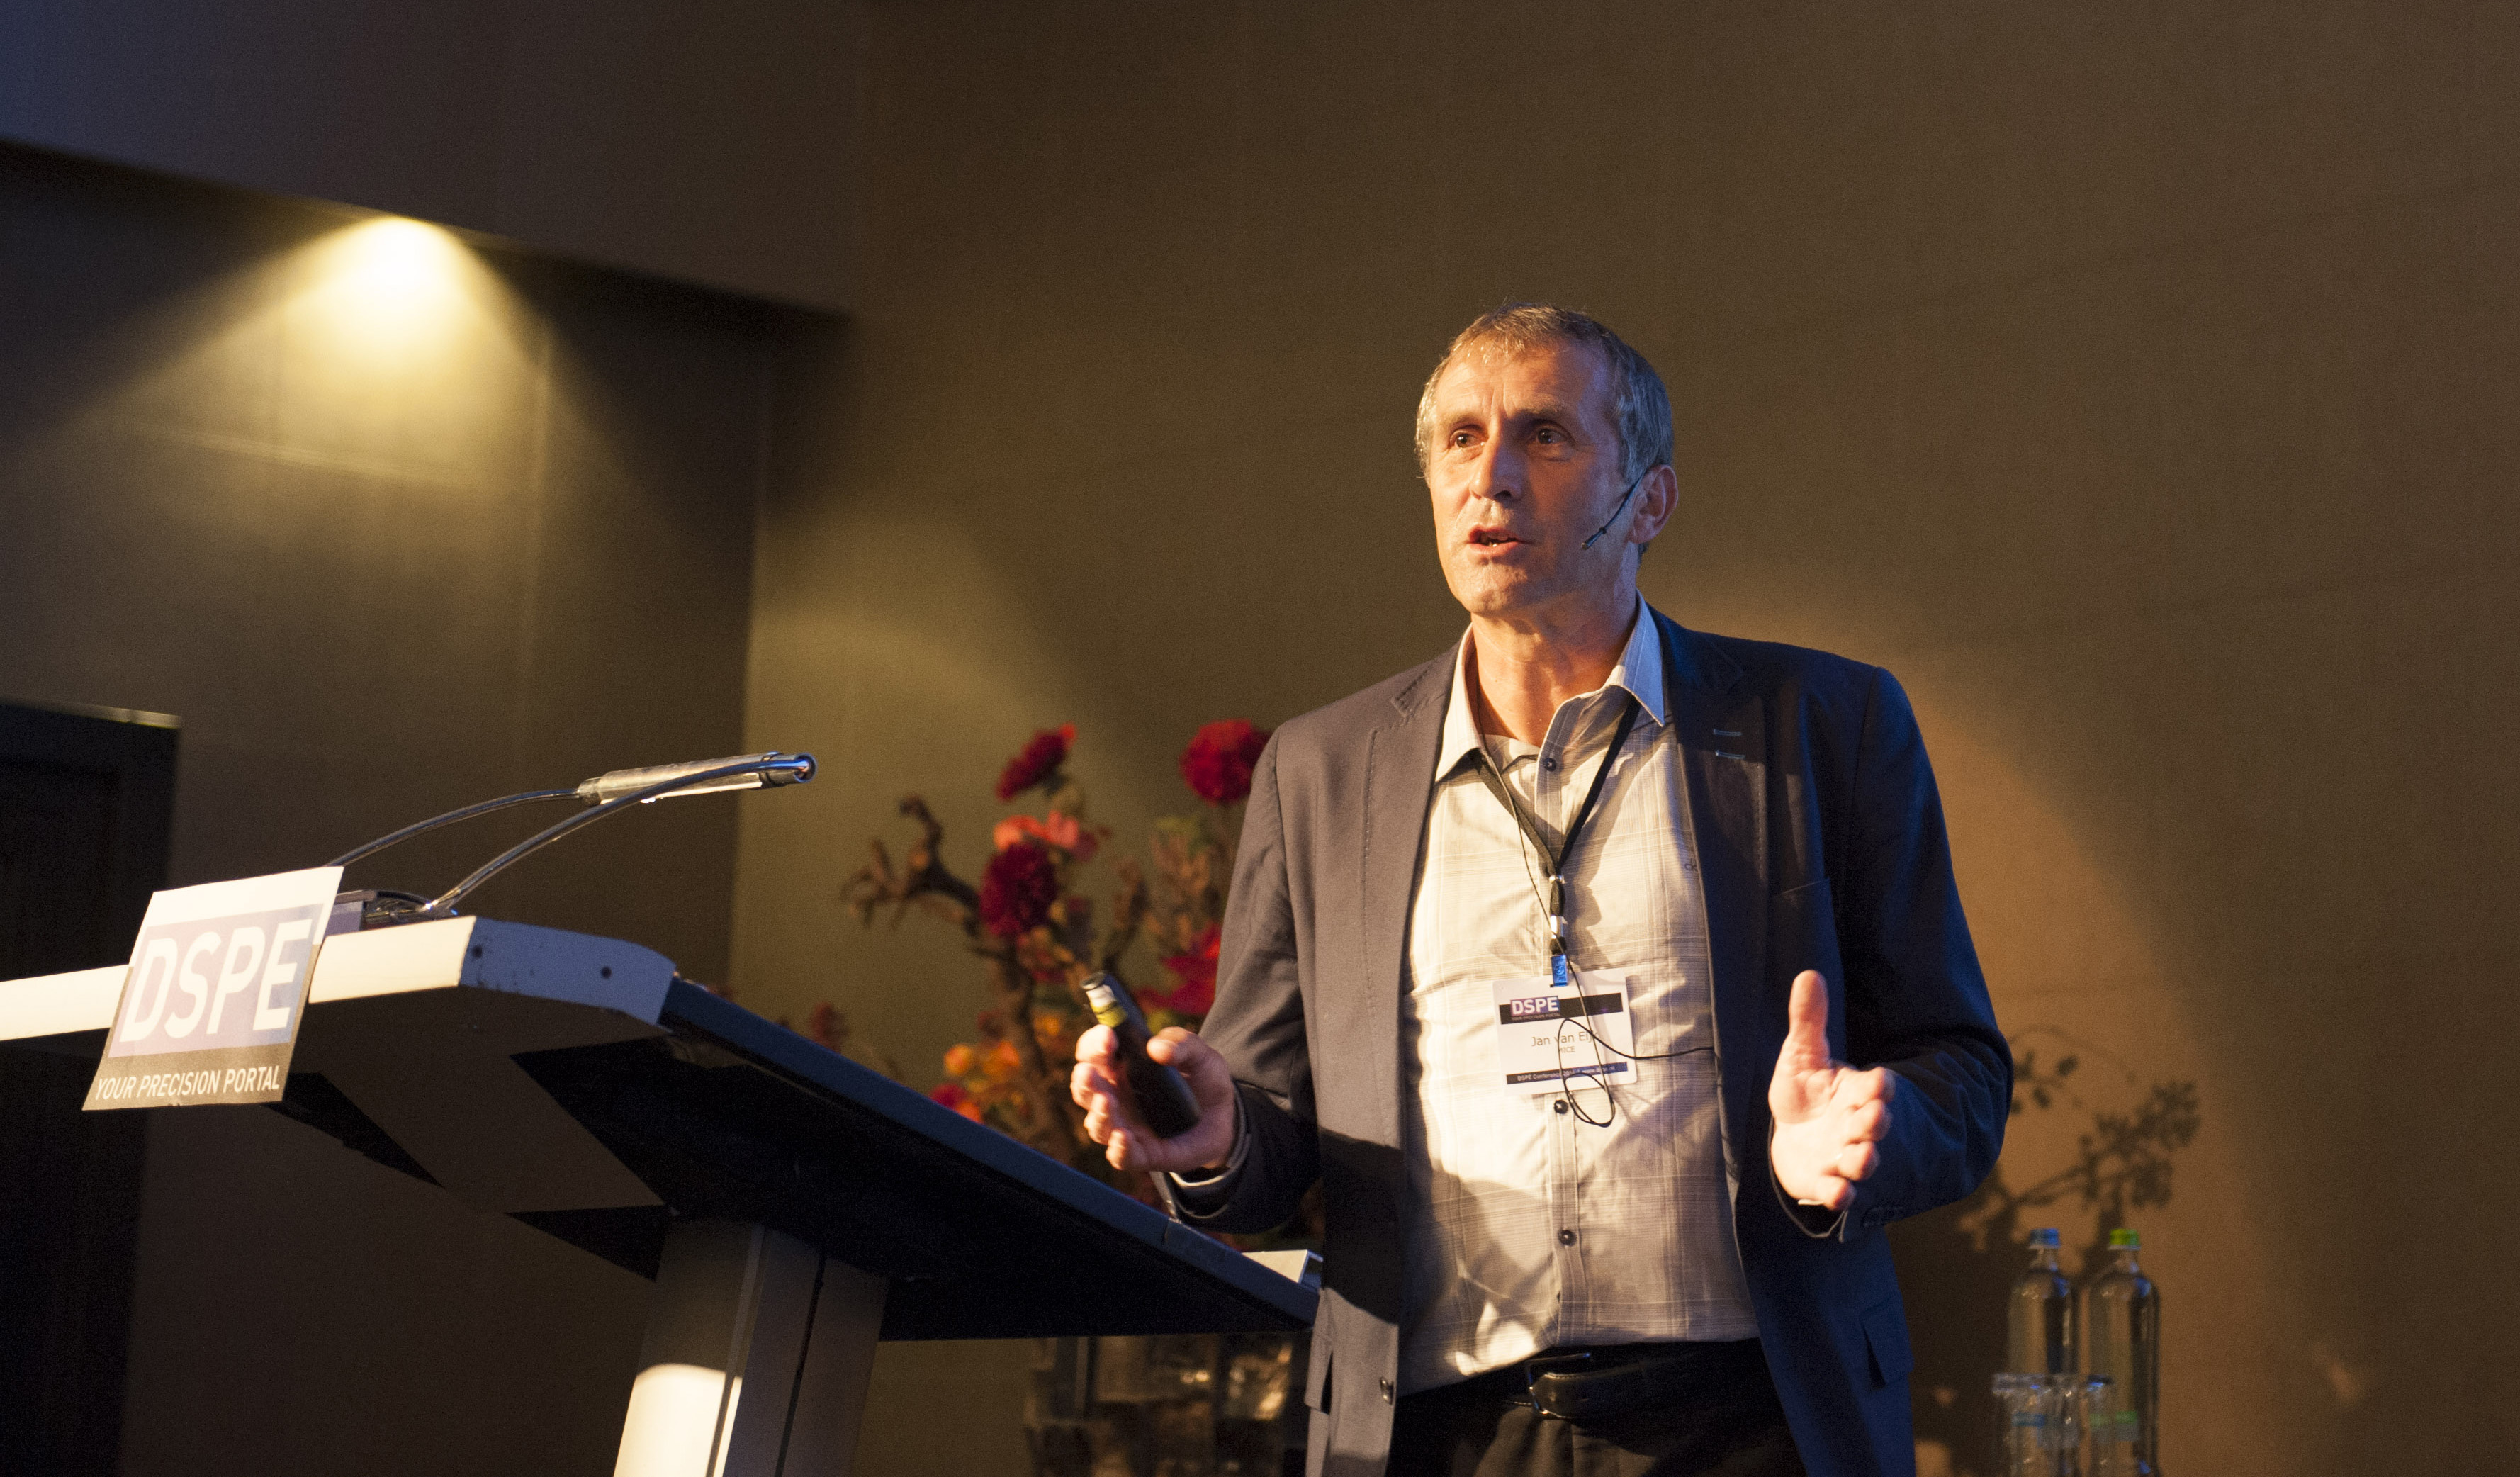 Jan van Eijk speaks at the 2014 DSPE Conference on Precision Mechatronics